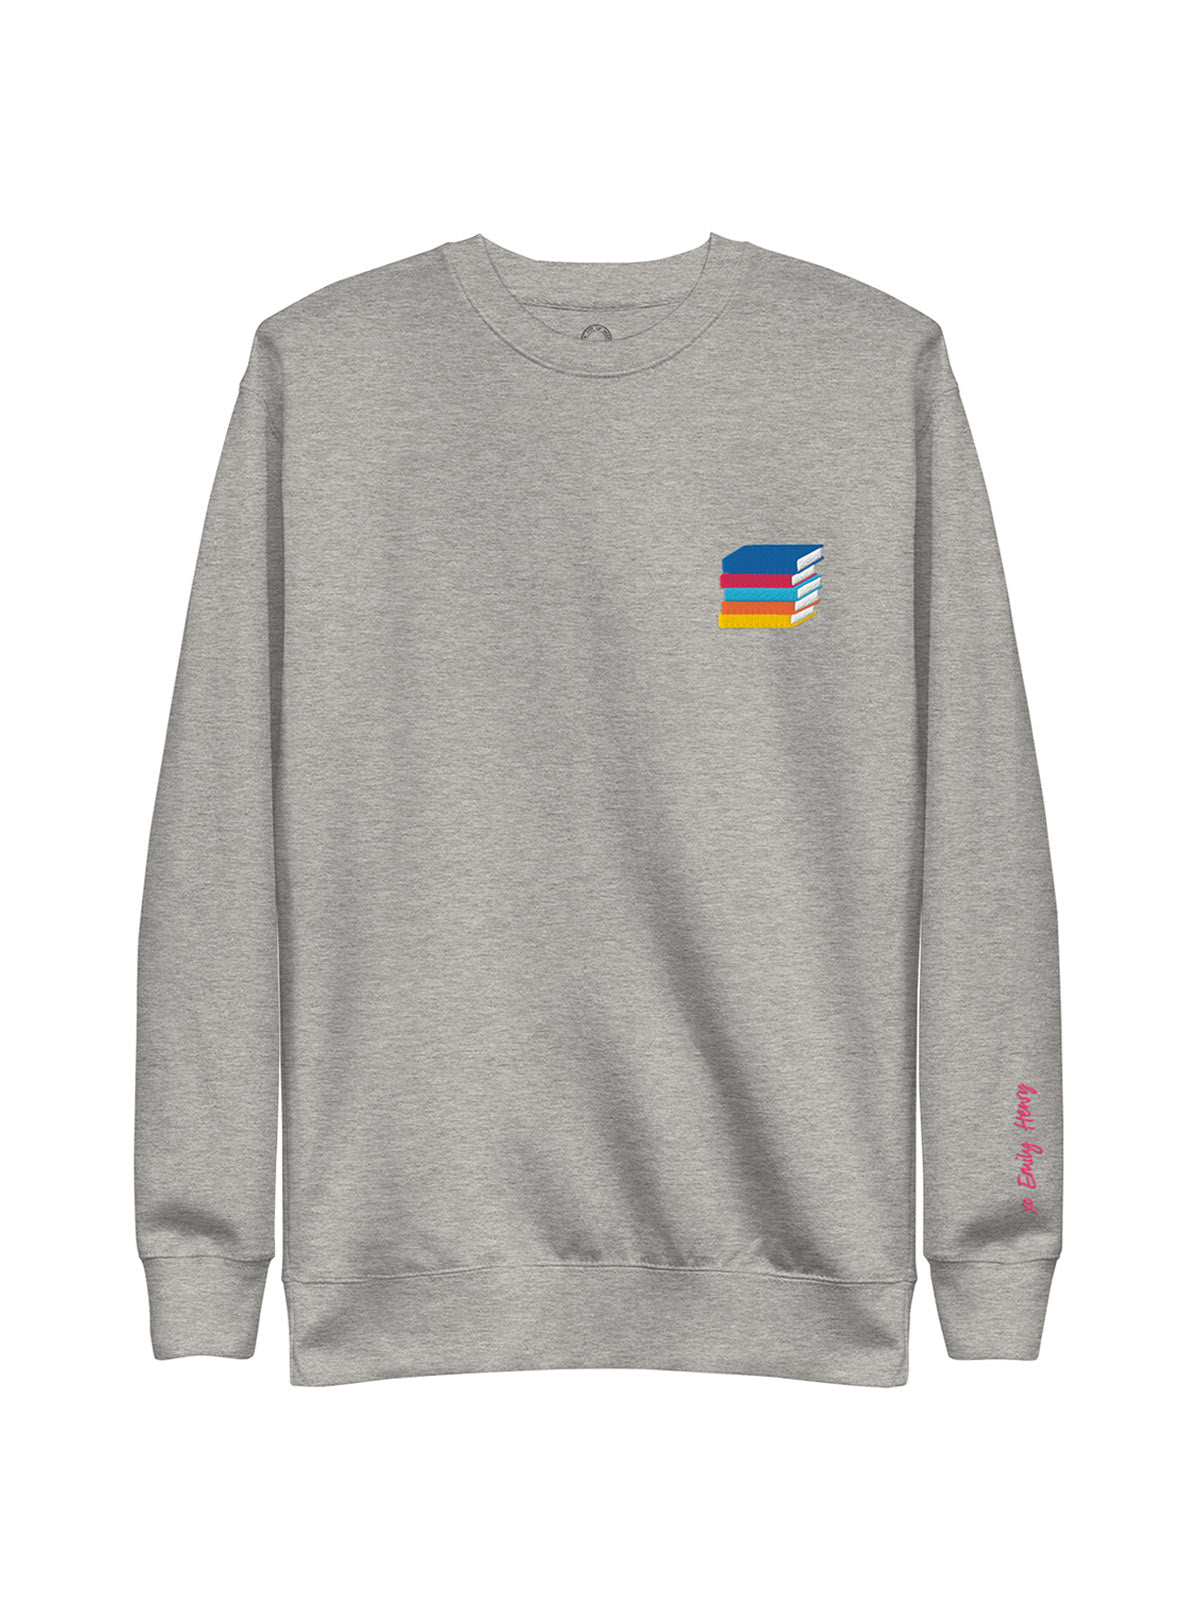 Embroidered Sweatshirts